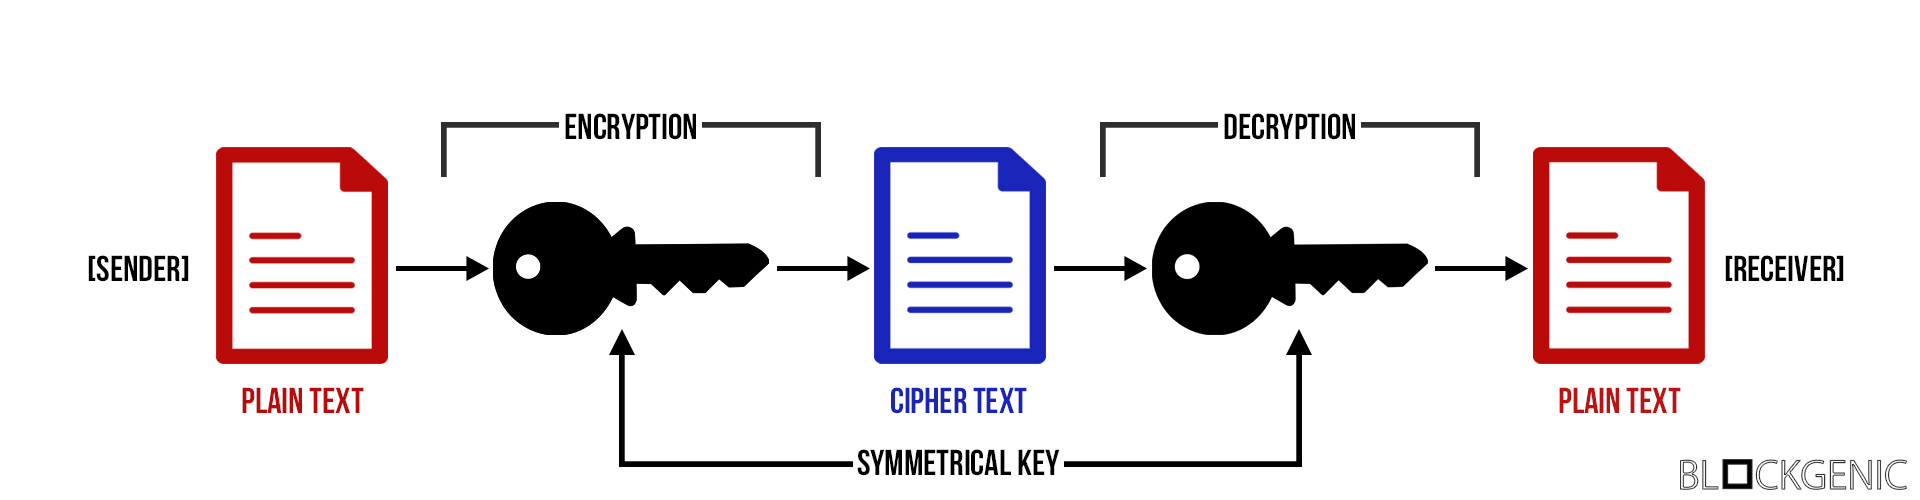 public key cryptography in blockchain